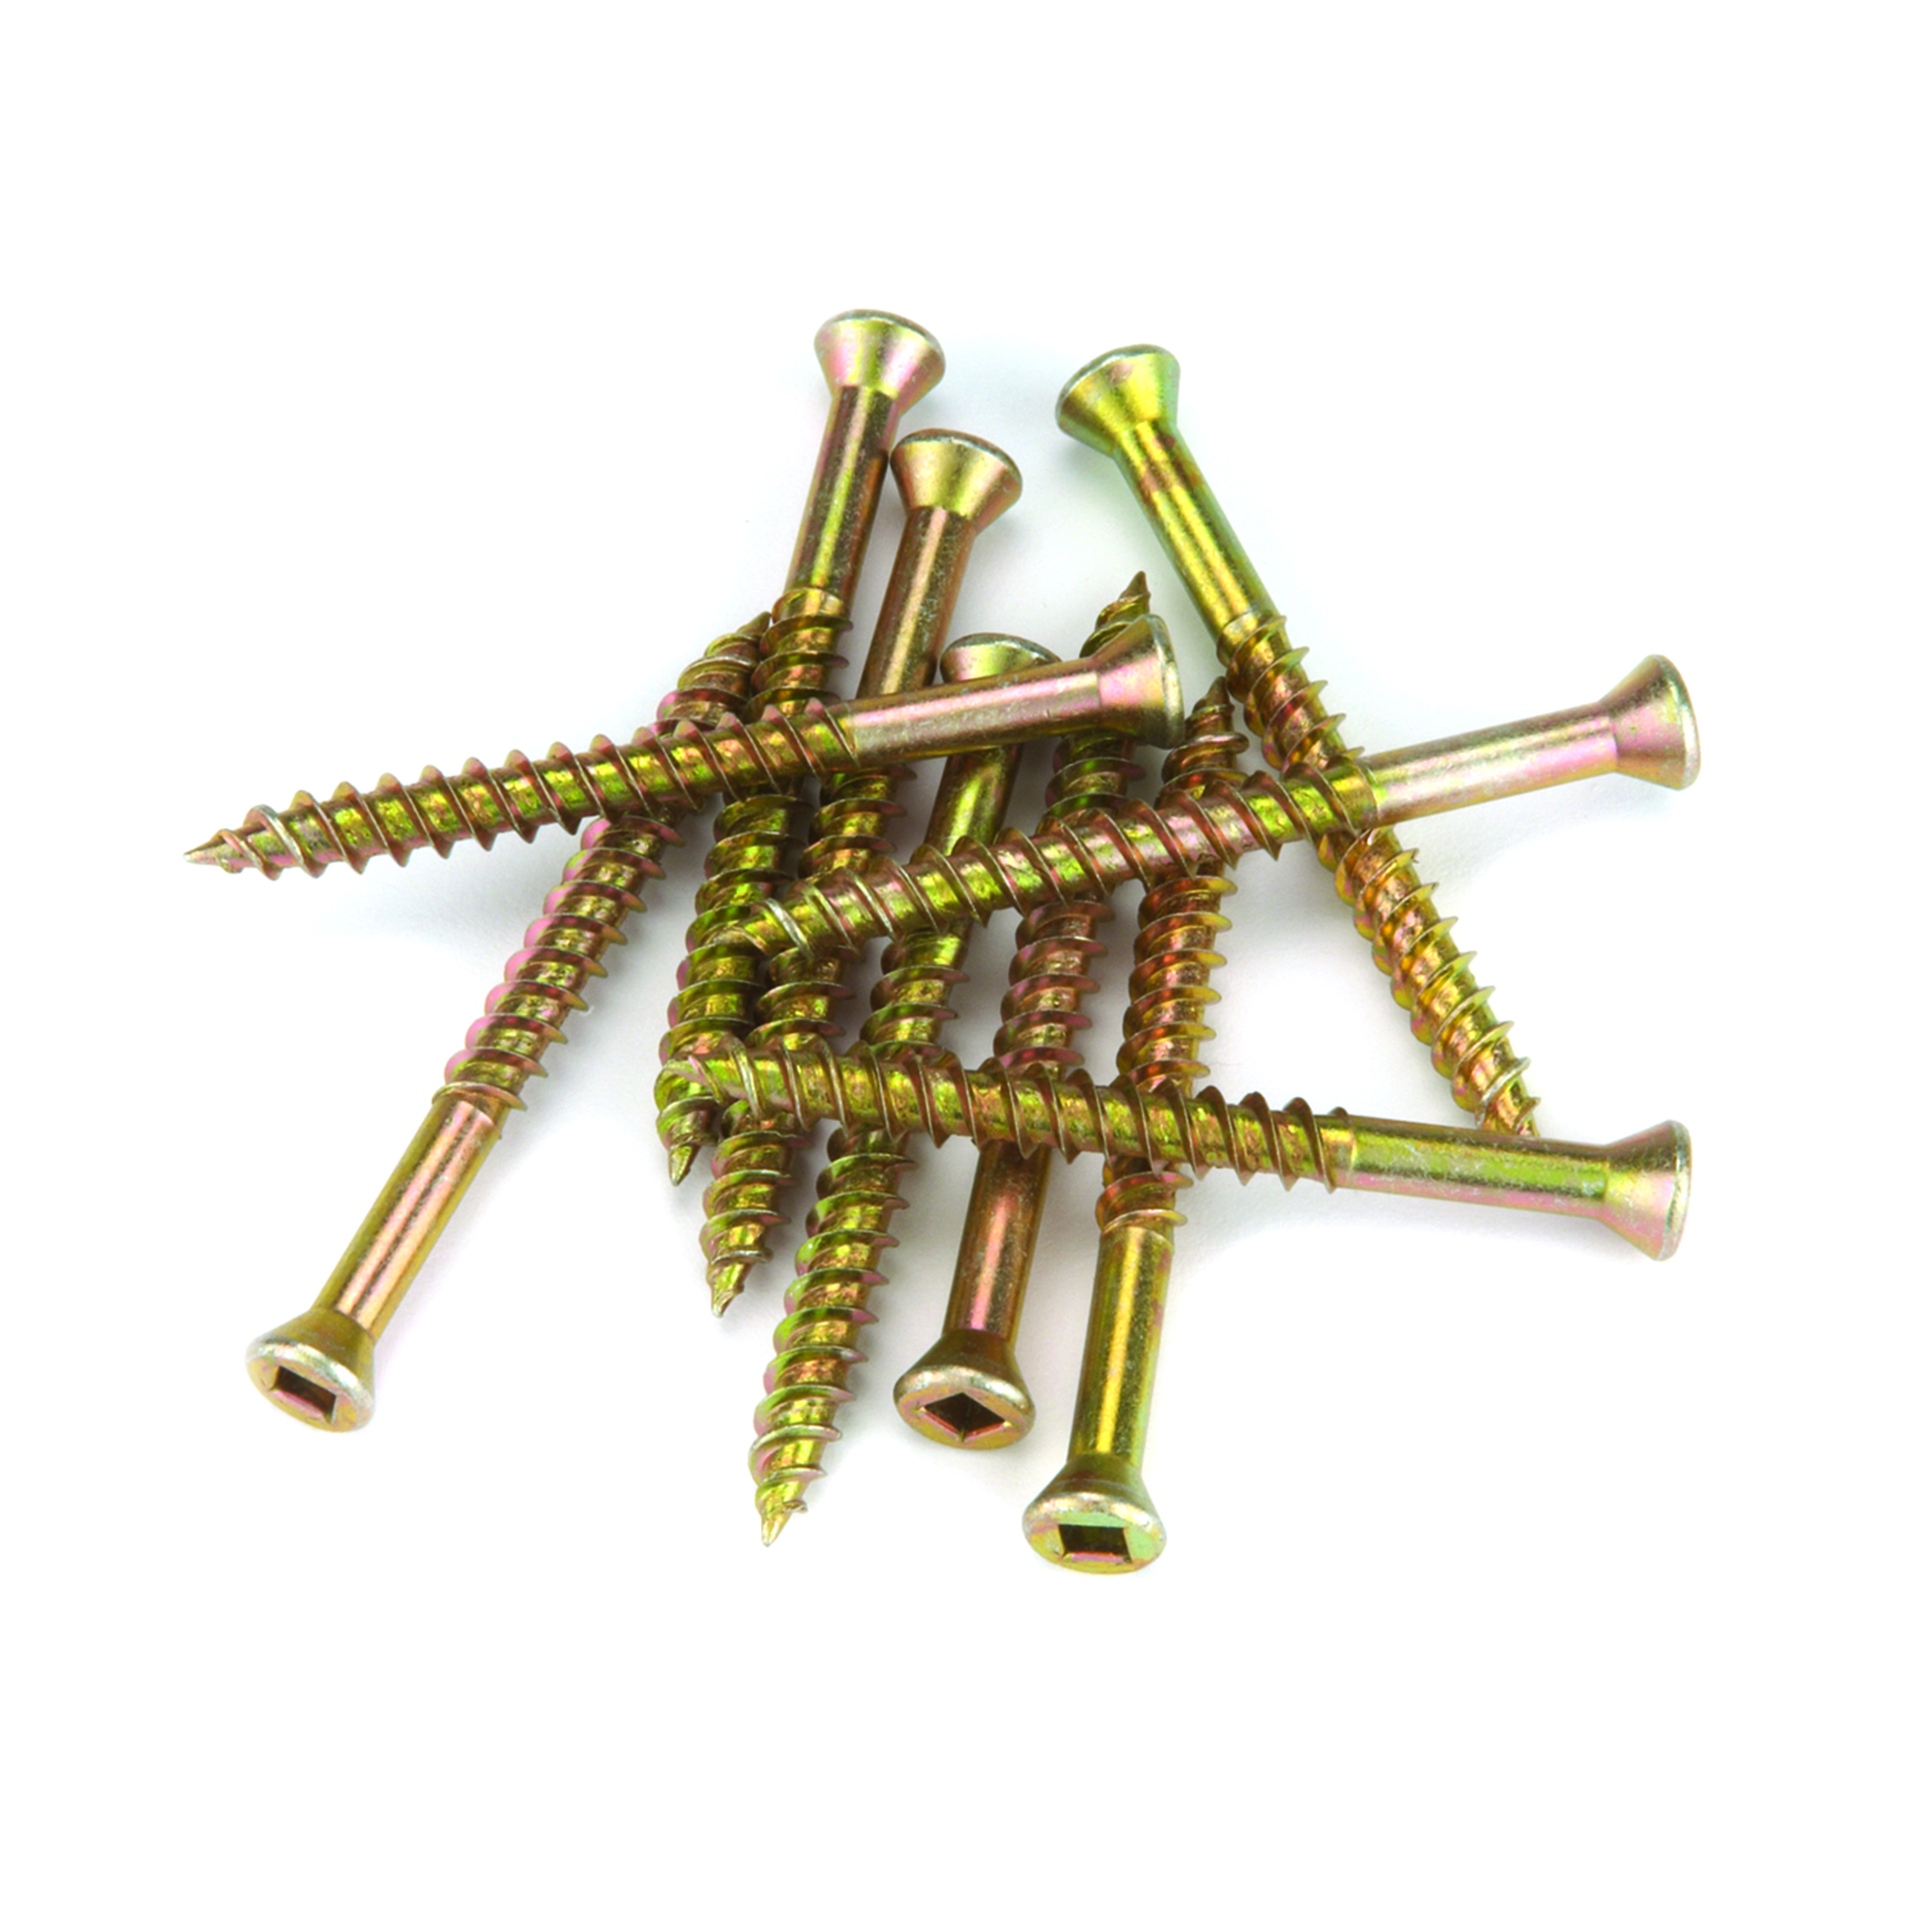 7 X 1-5/8 Square Drive Woodworking Screws, Trim Head, Yellow Zinc, 100-piece